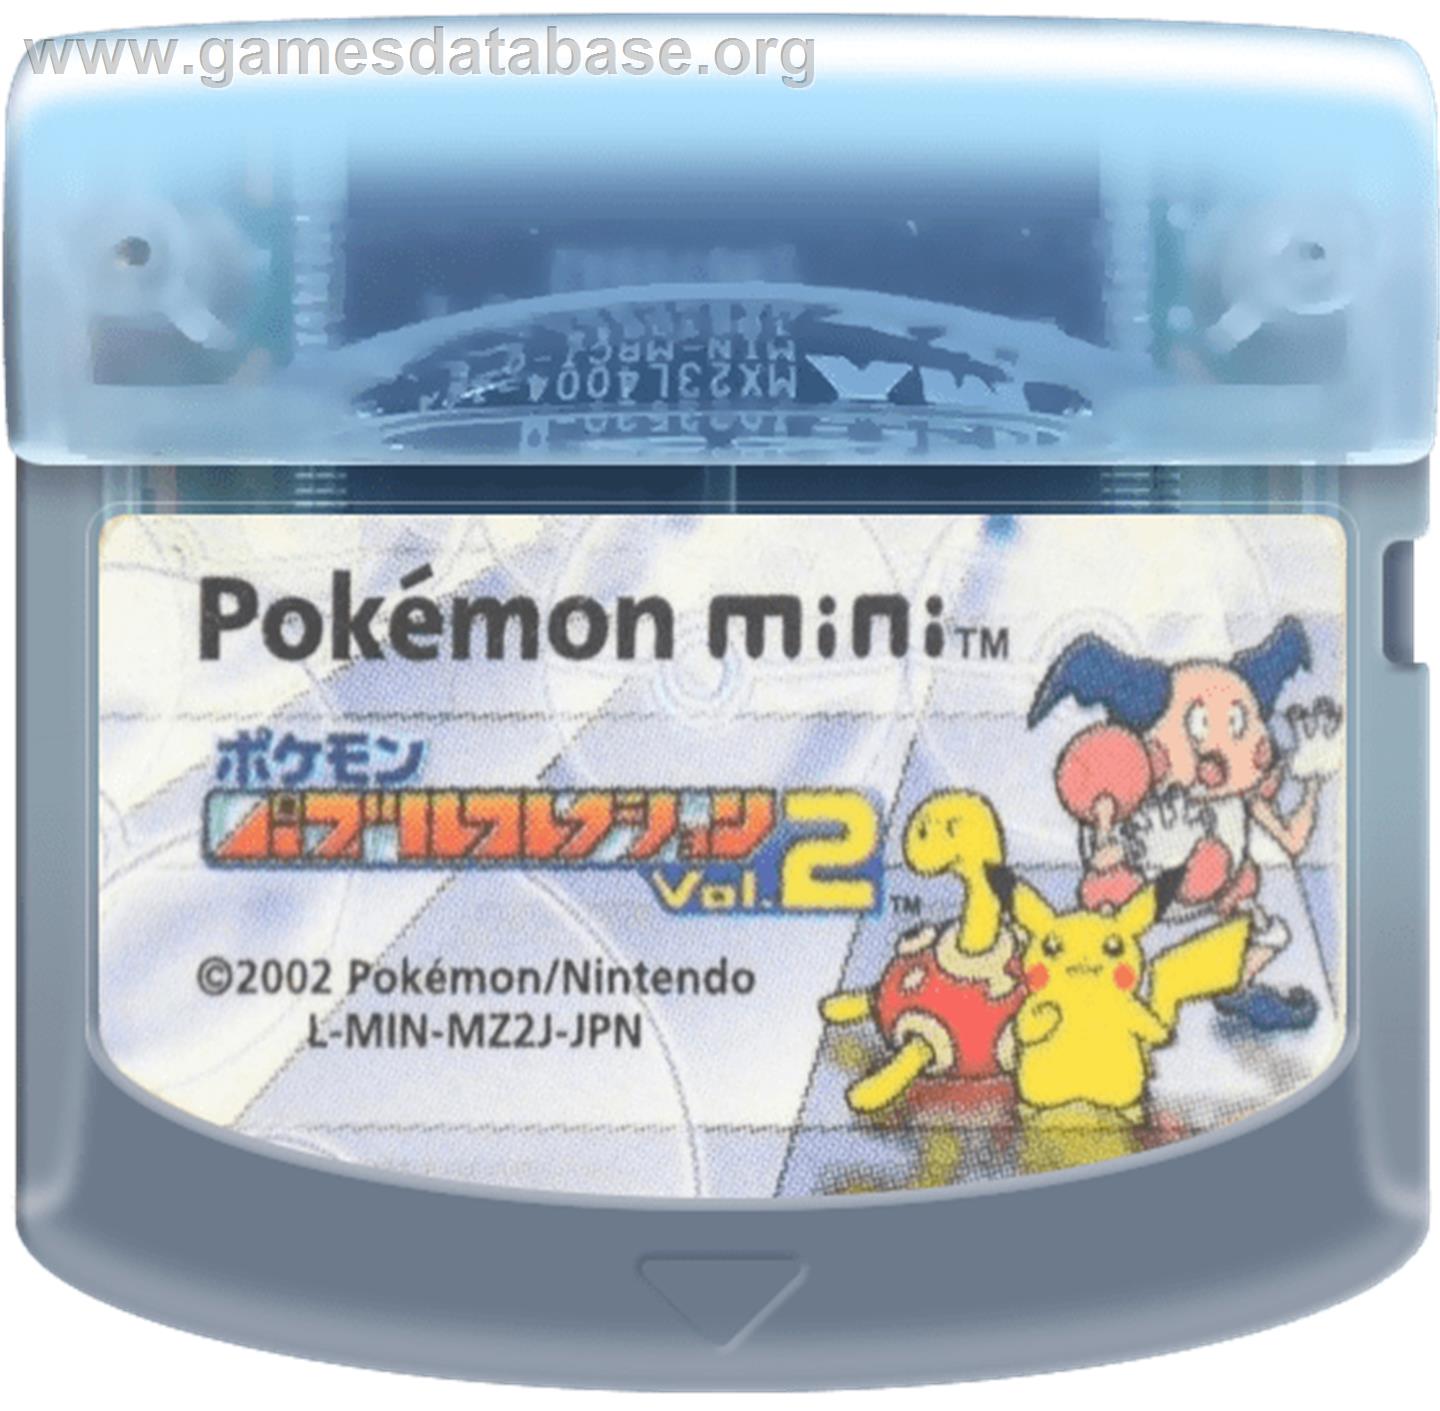 Pokemon Puzzle Collection Vol. 2 - Nintendo Pokemon Mini - Artwork - Cartridge